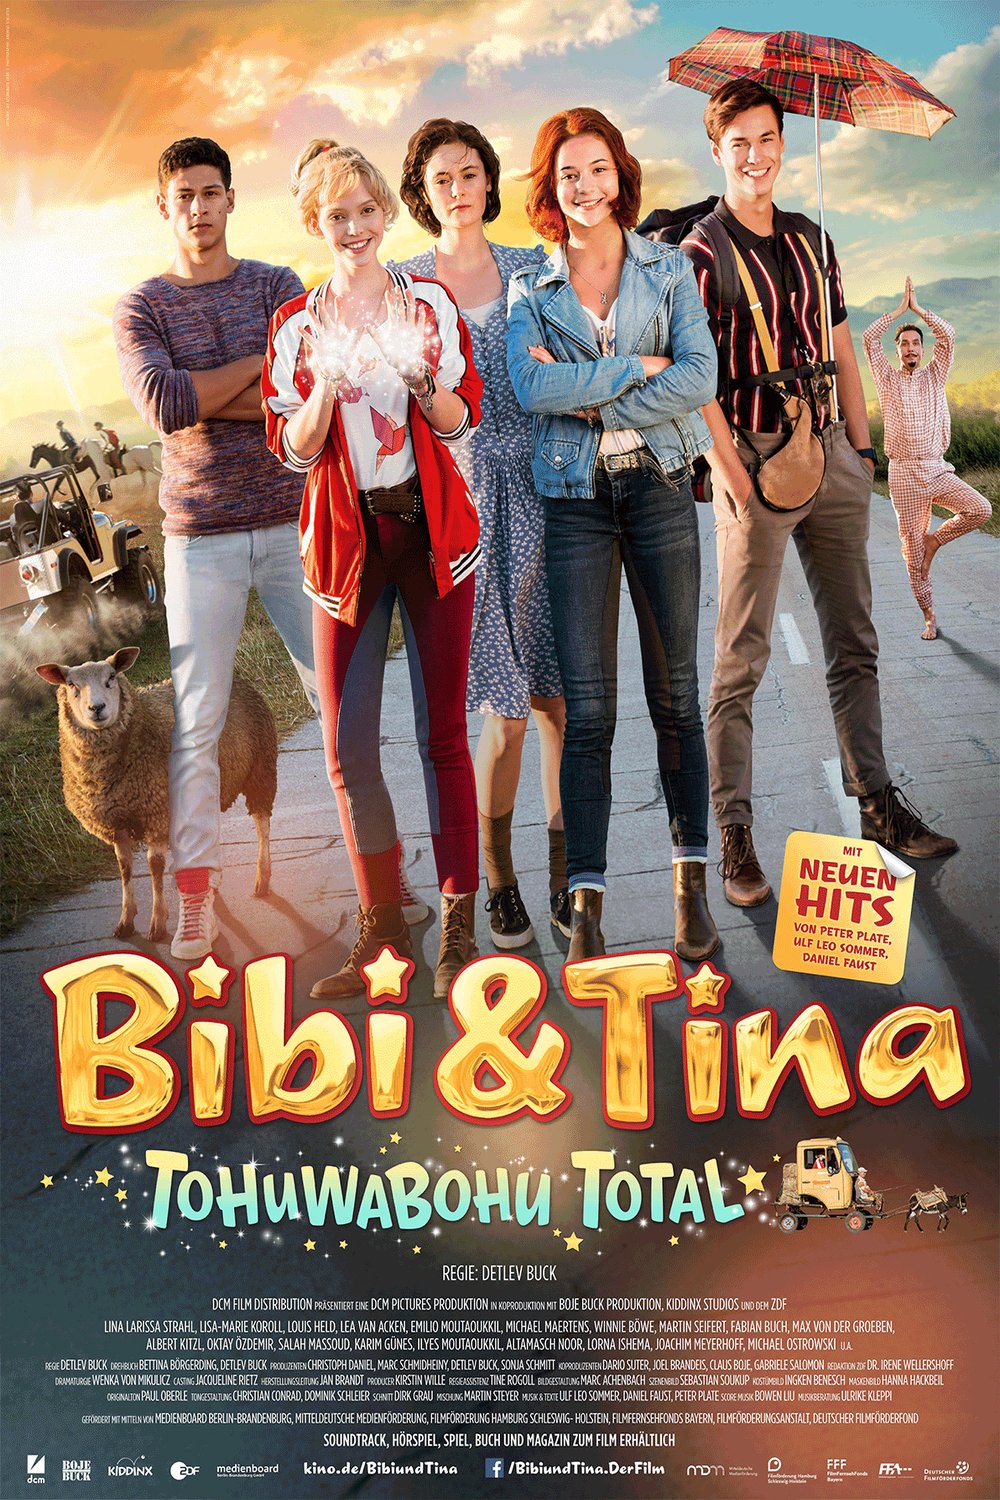 German poster of the movie Bibi & Tina: Tohuwabohu total